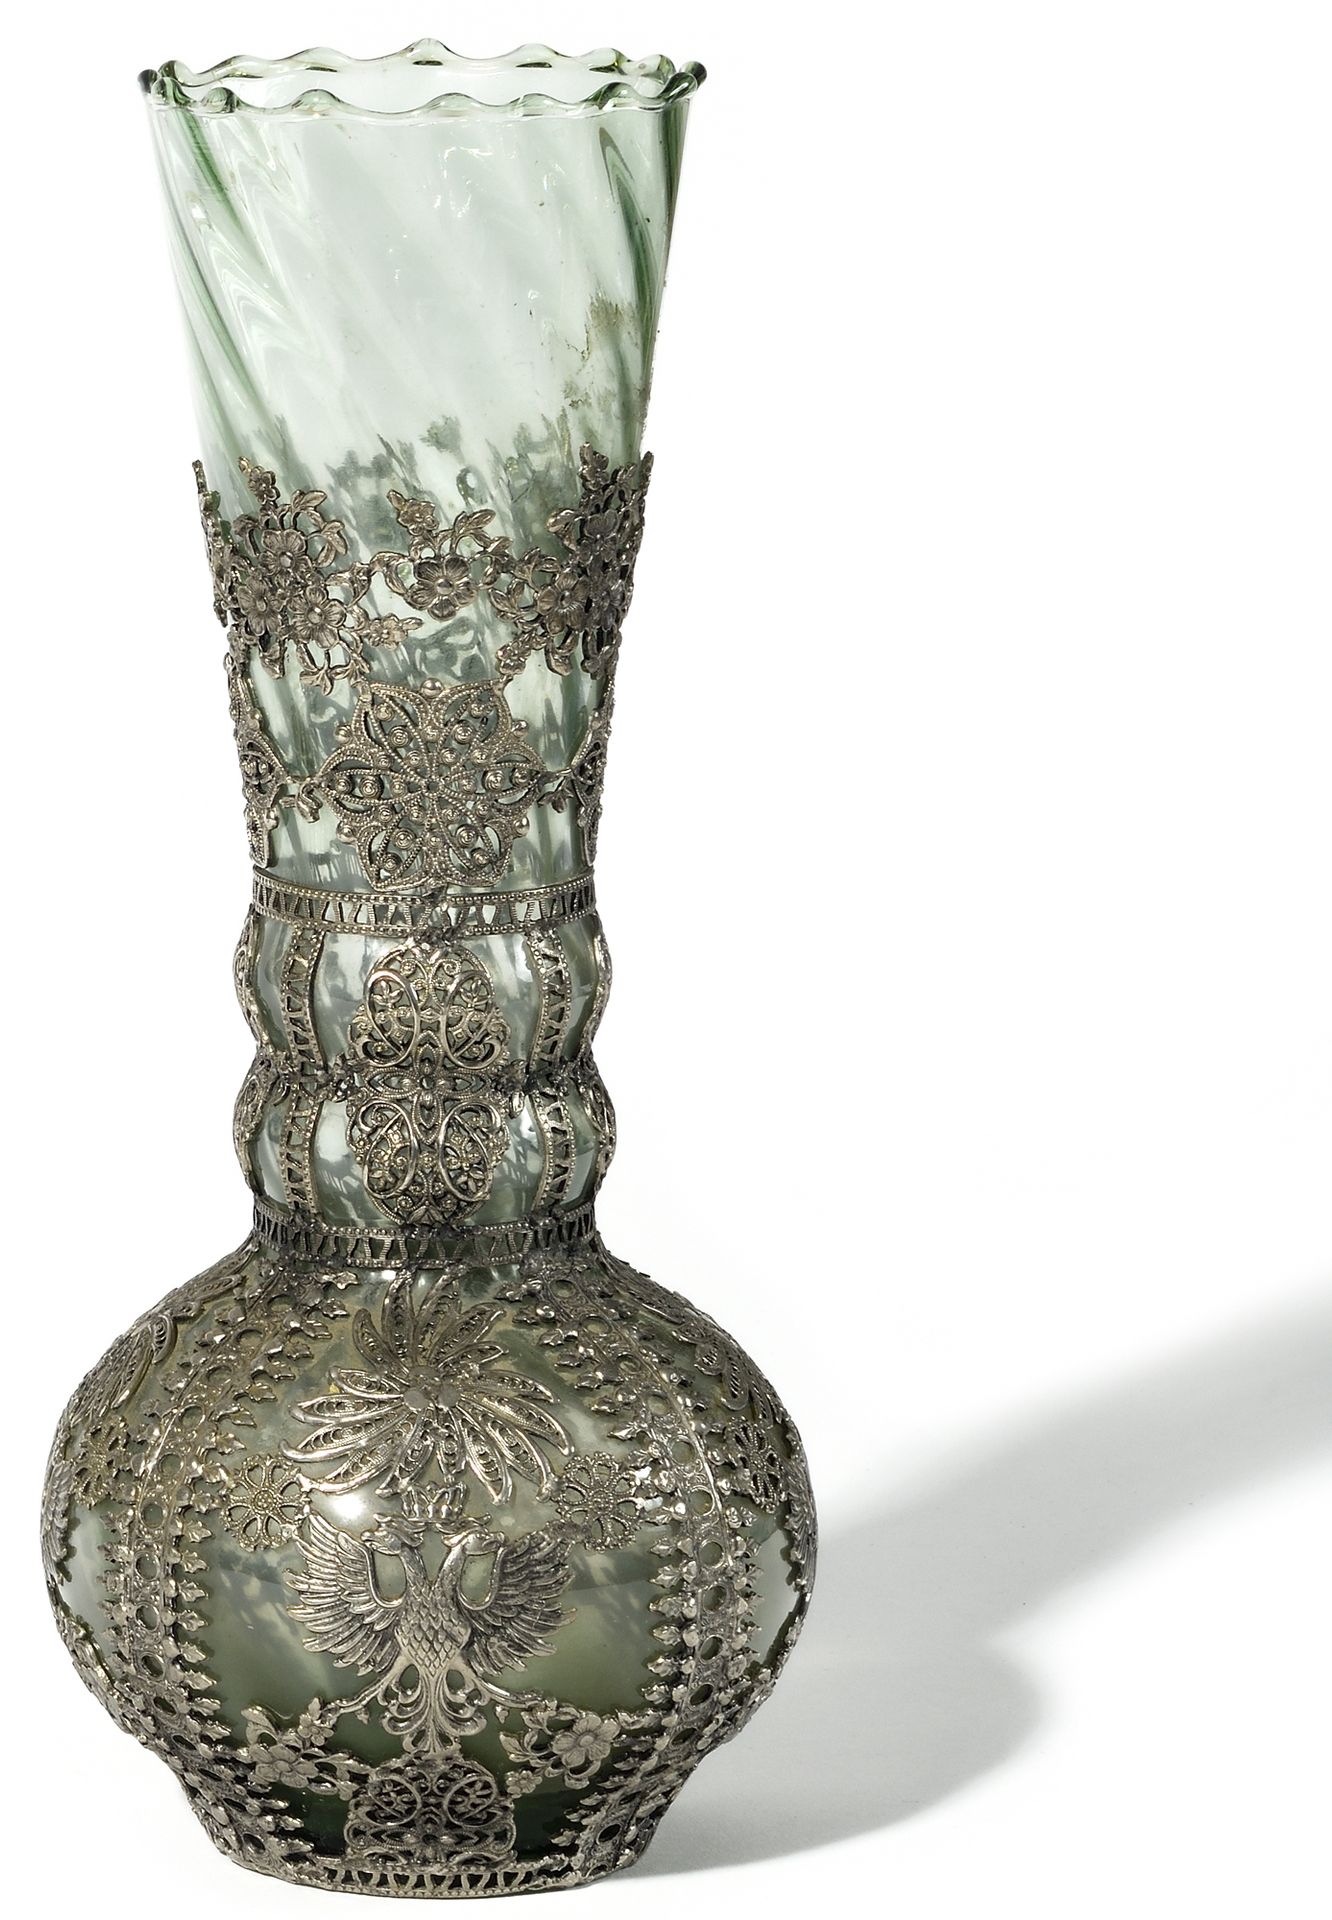 Null 双头鹰图案的花瓶

玻璃，锡器

高：29.5厘米。D : 12厘米。

东欧，20世纪初



创作的内容是："我的作品"，"我的作品"，"我的作品&hellip;